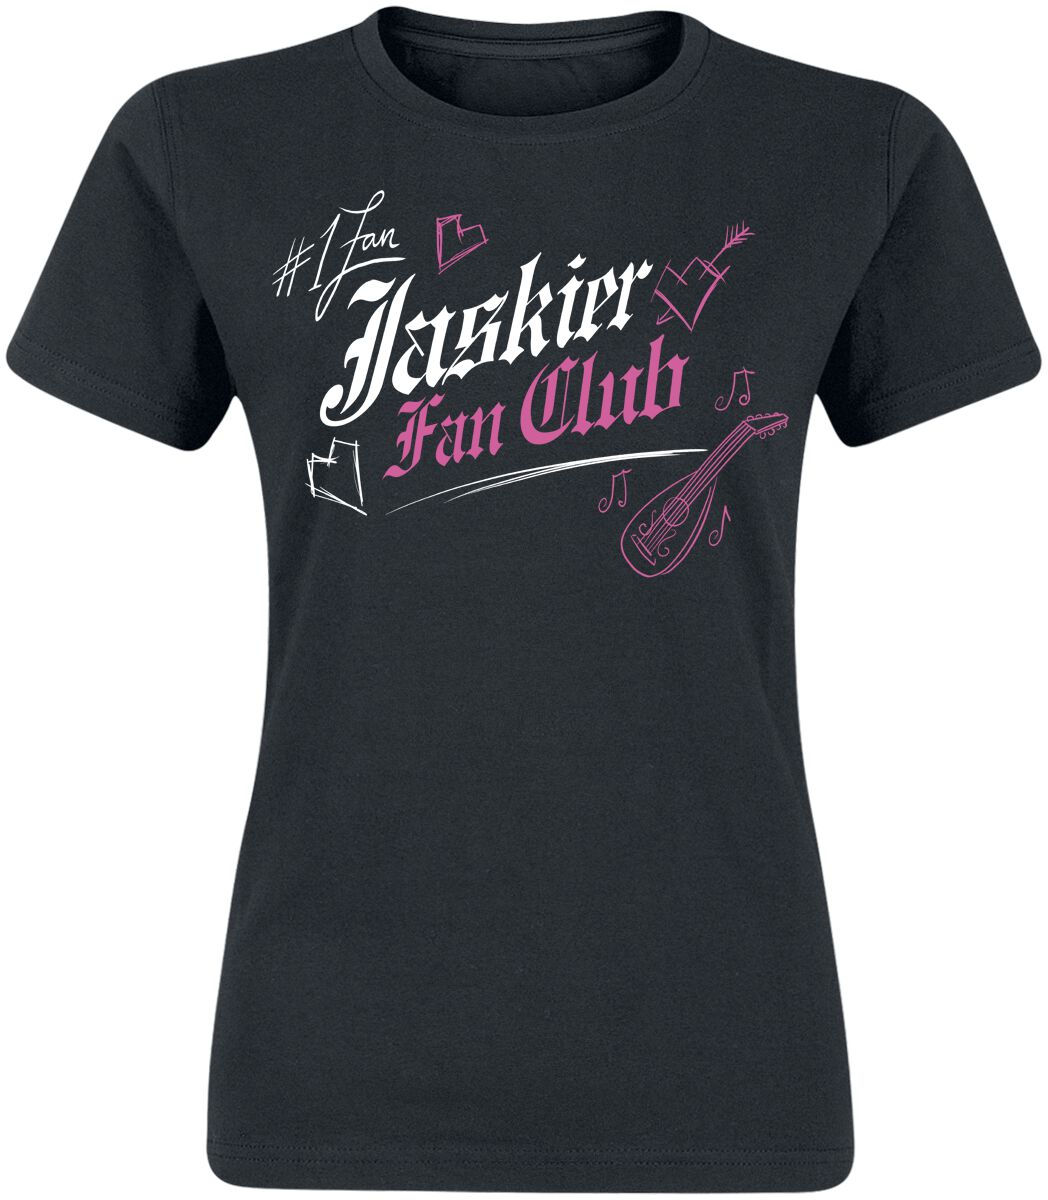 The Witcher Jaskier Fan Club T-Shirt schwarz in M